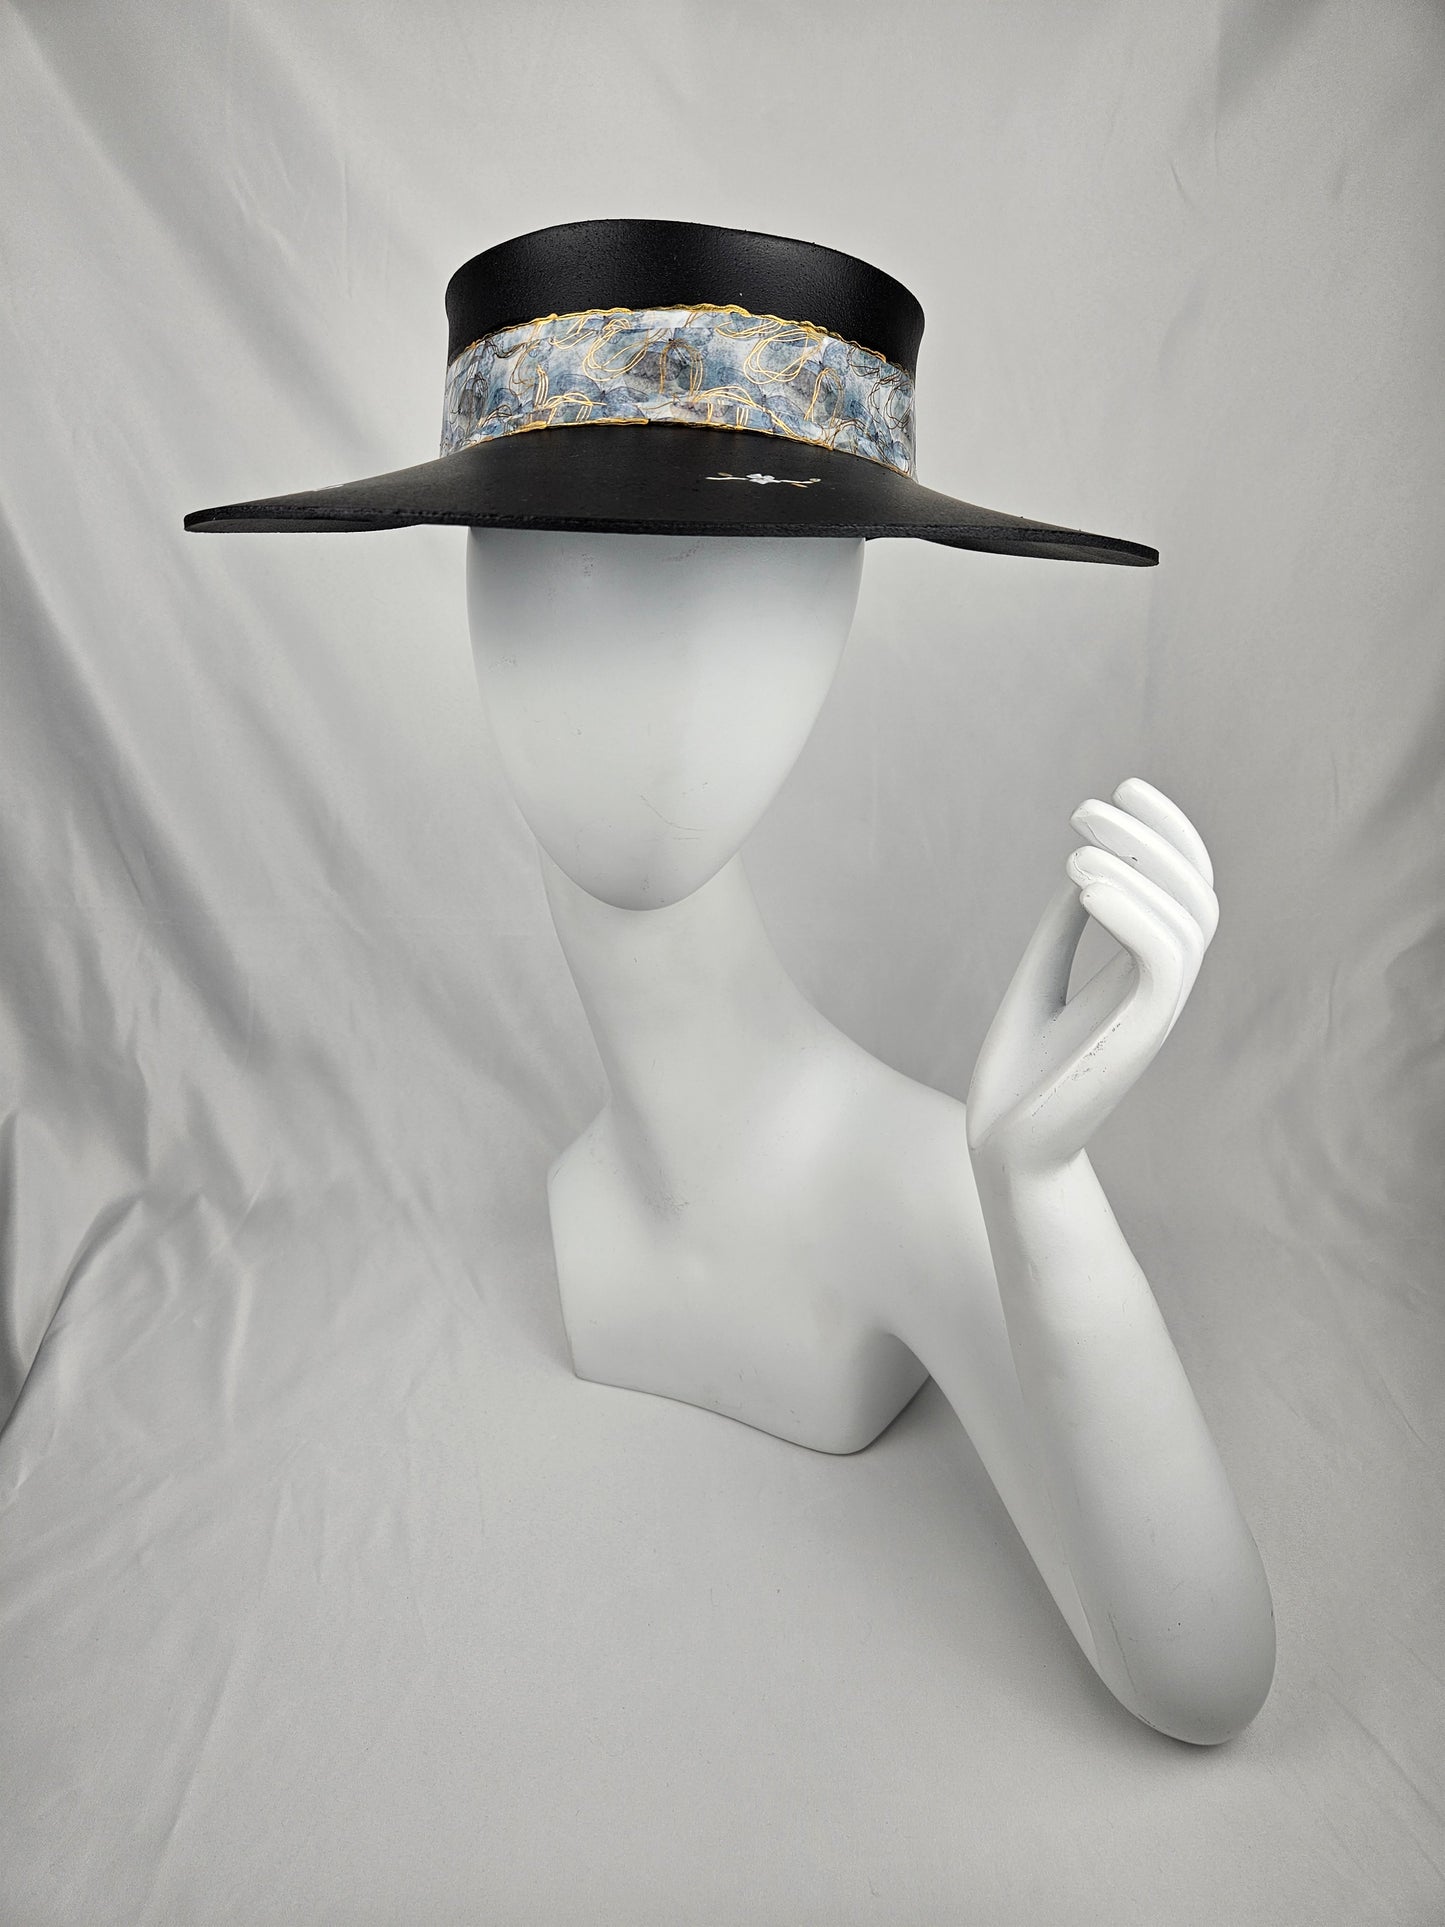 Timeless Black Audrey Foam Sun Visor Hat with Pale Blue Band and Handpainted Floral Motif: Big Brim, Swim, Pool, UV Resistant, No Headache